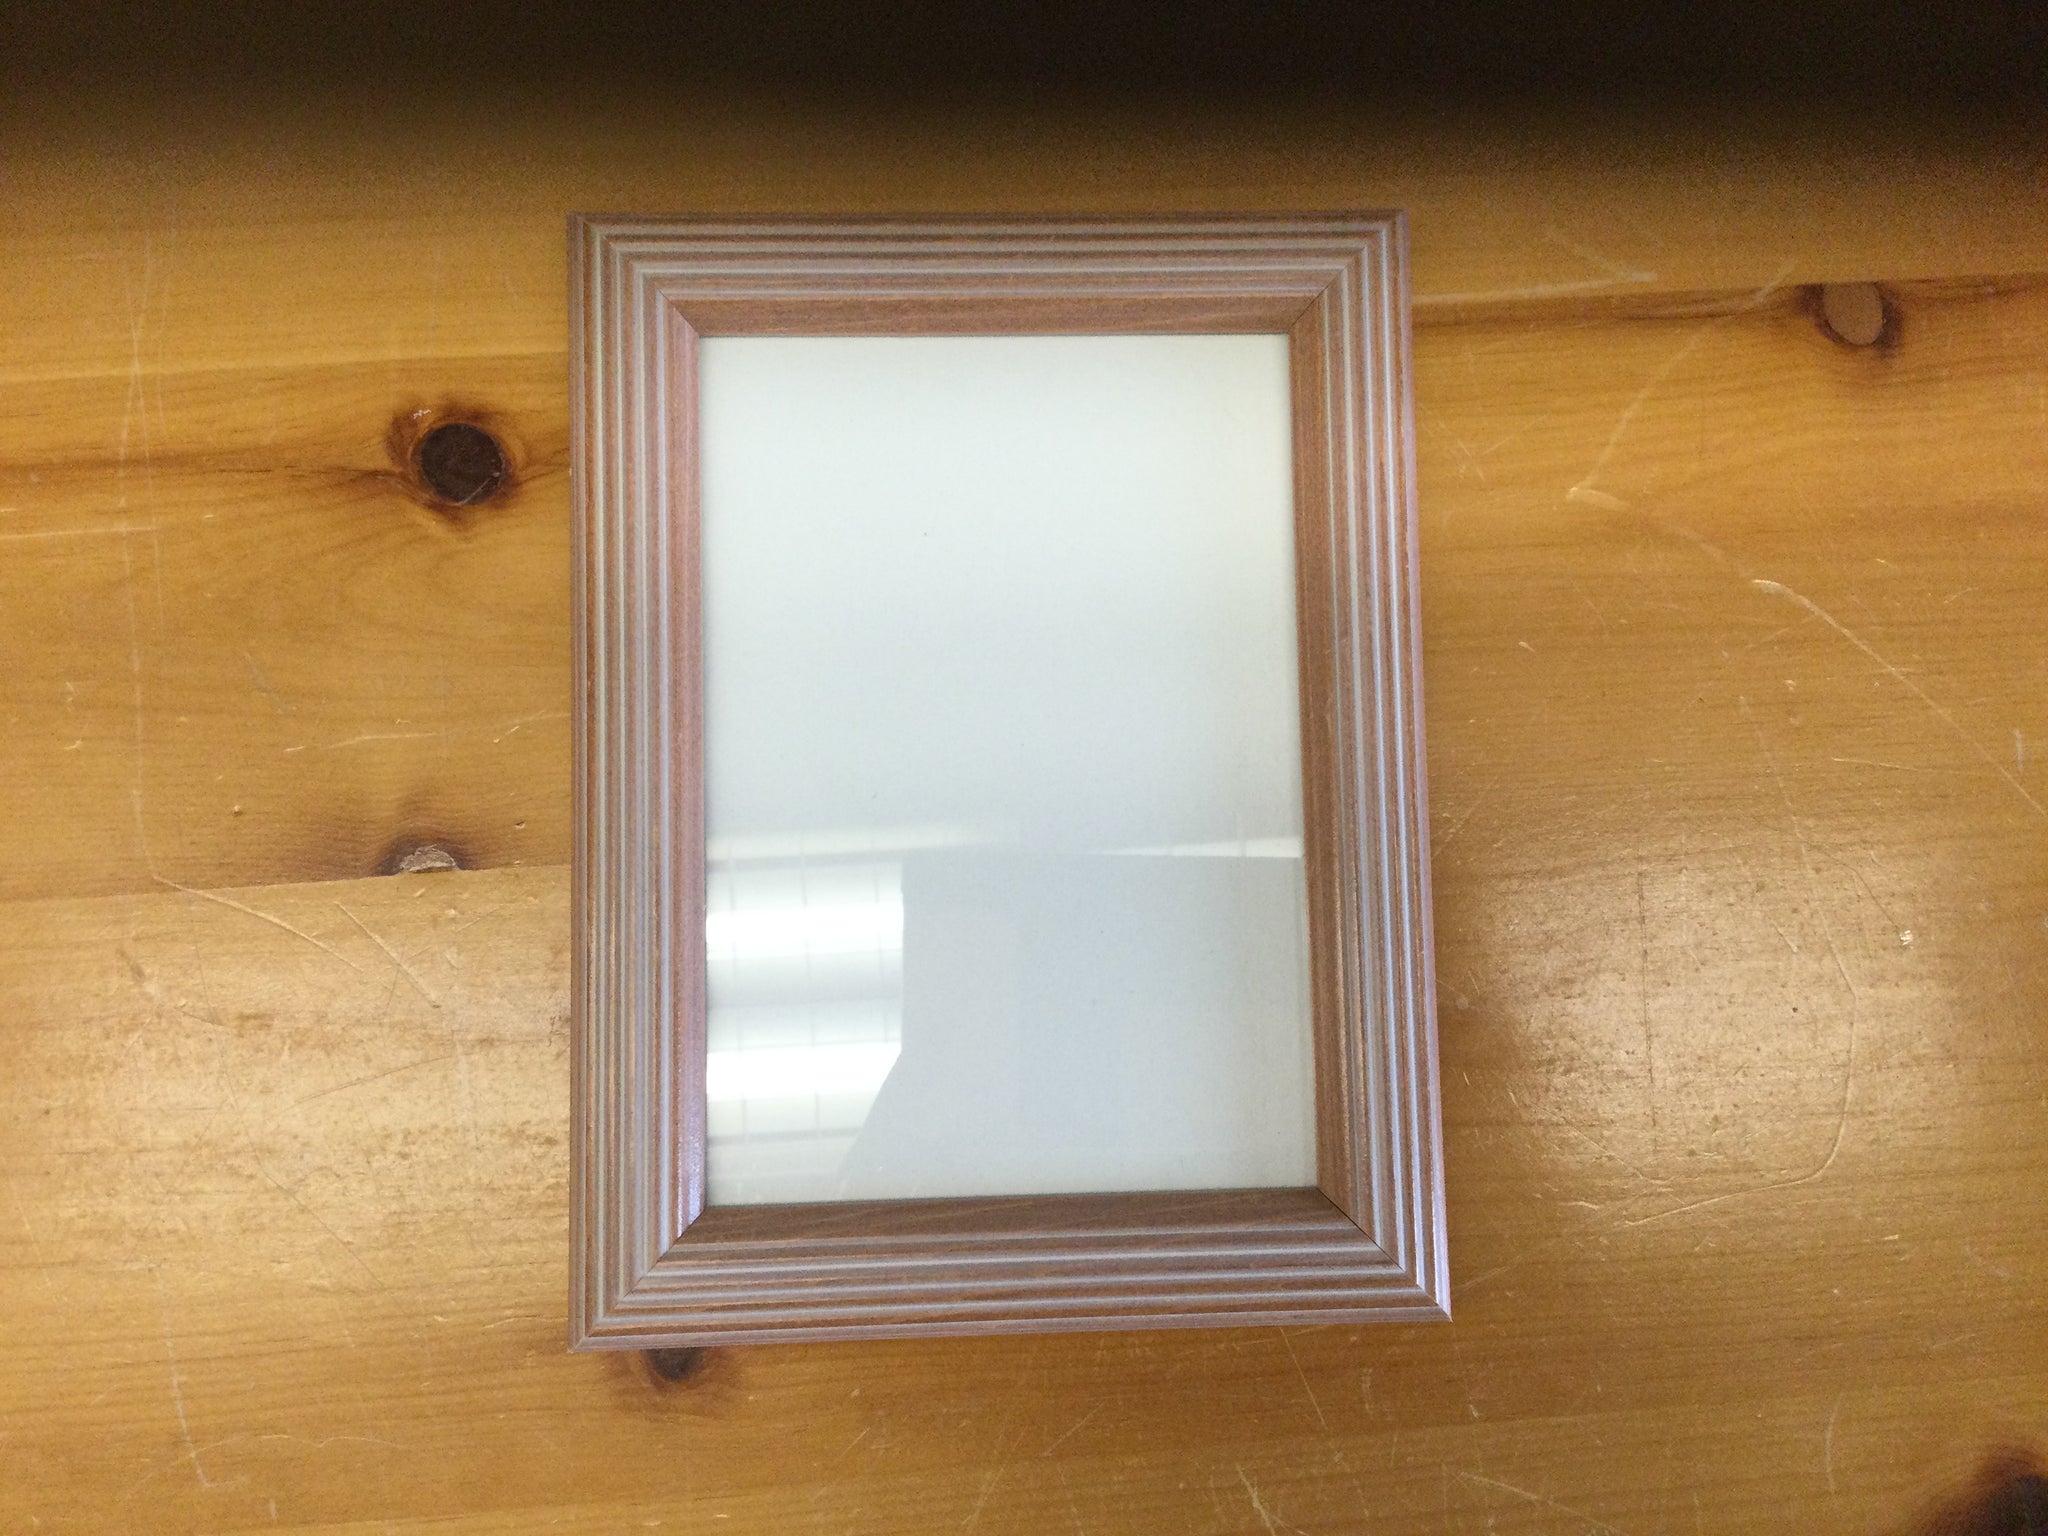 G.St Wooden Frame - 5x7 - Light Brown - 2357-13